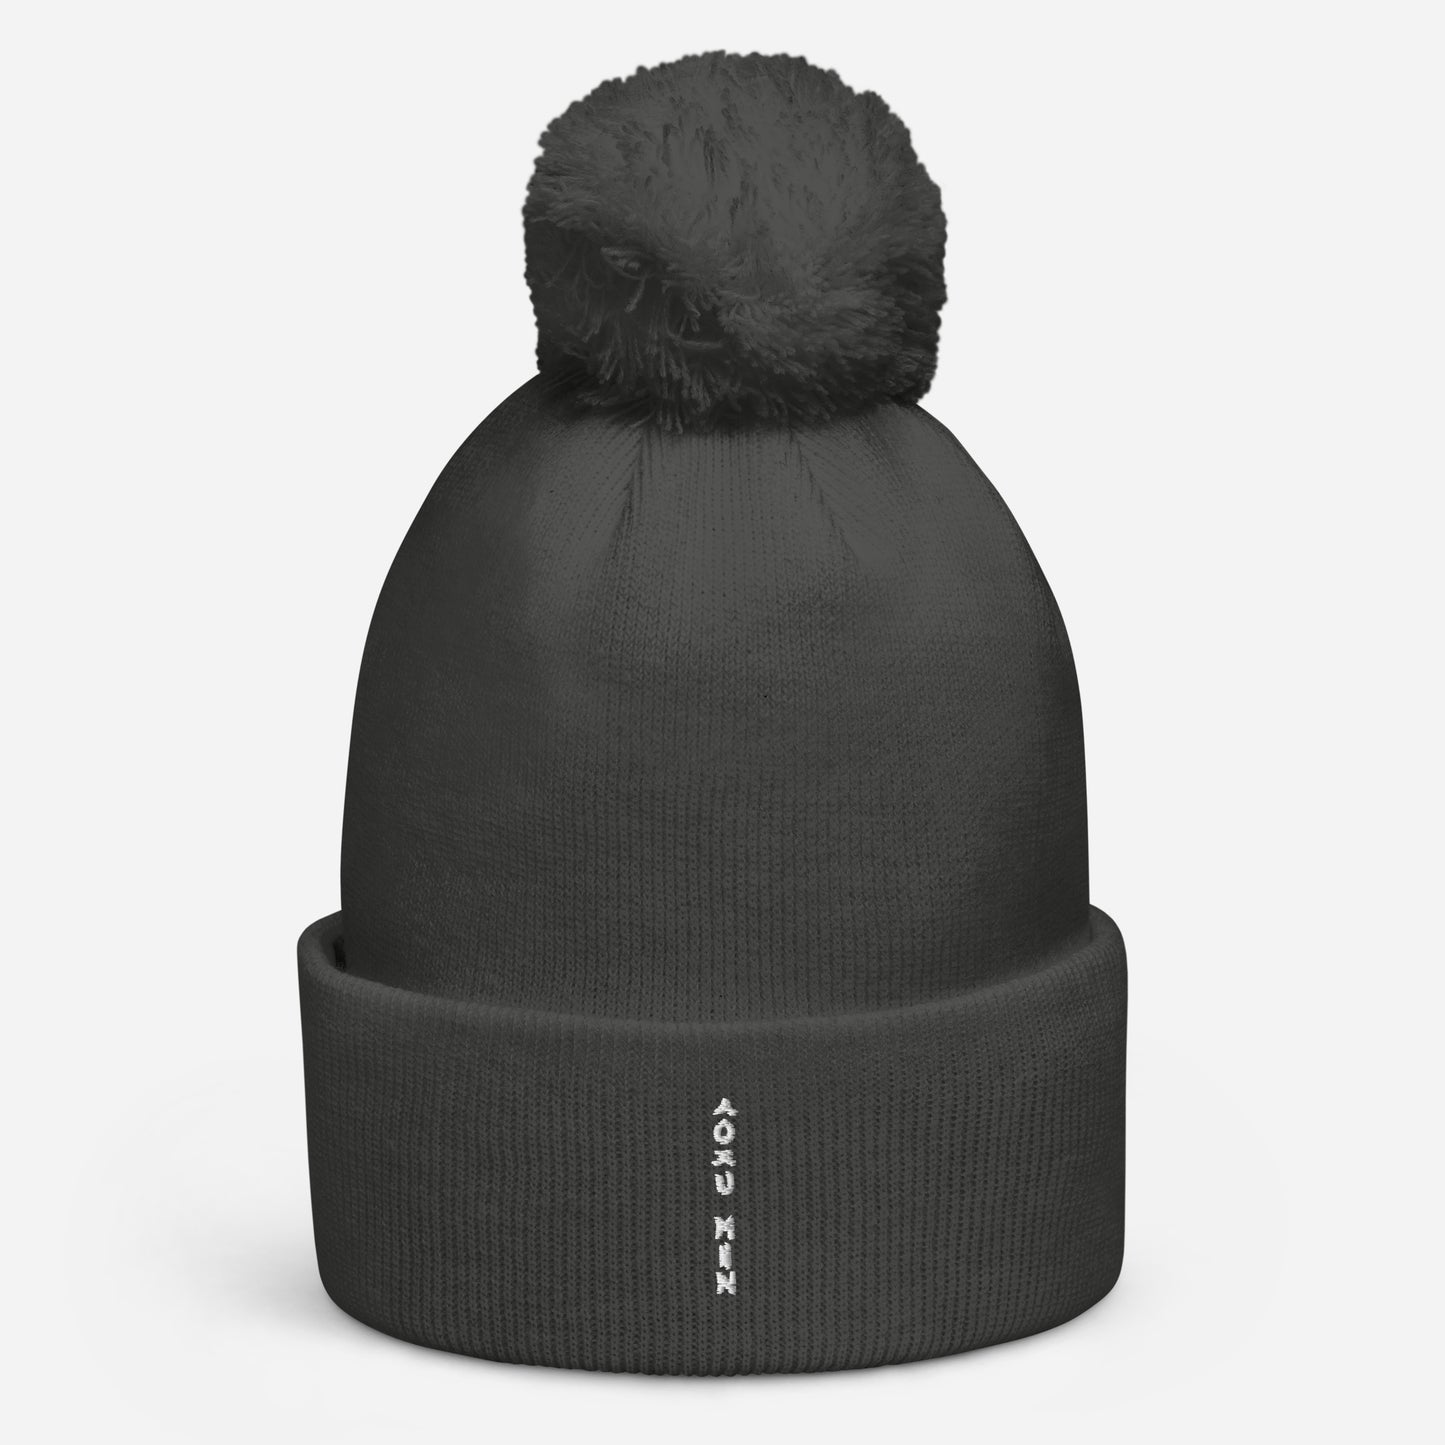 Grey Korean style bobble hat by Soju Man Designs